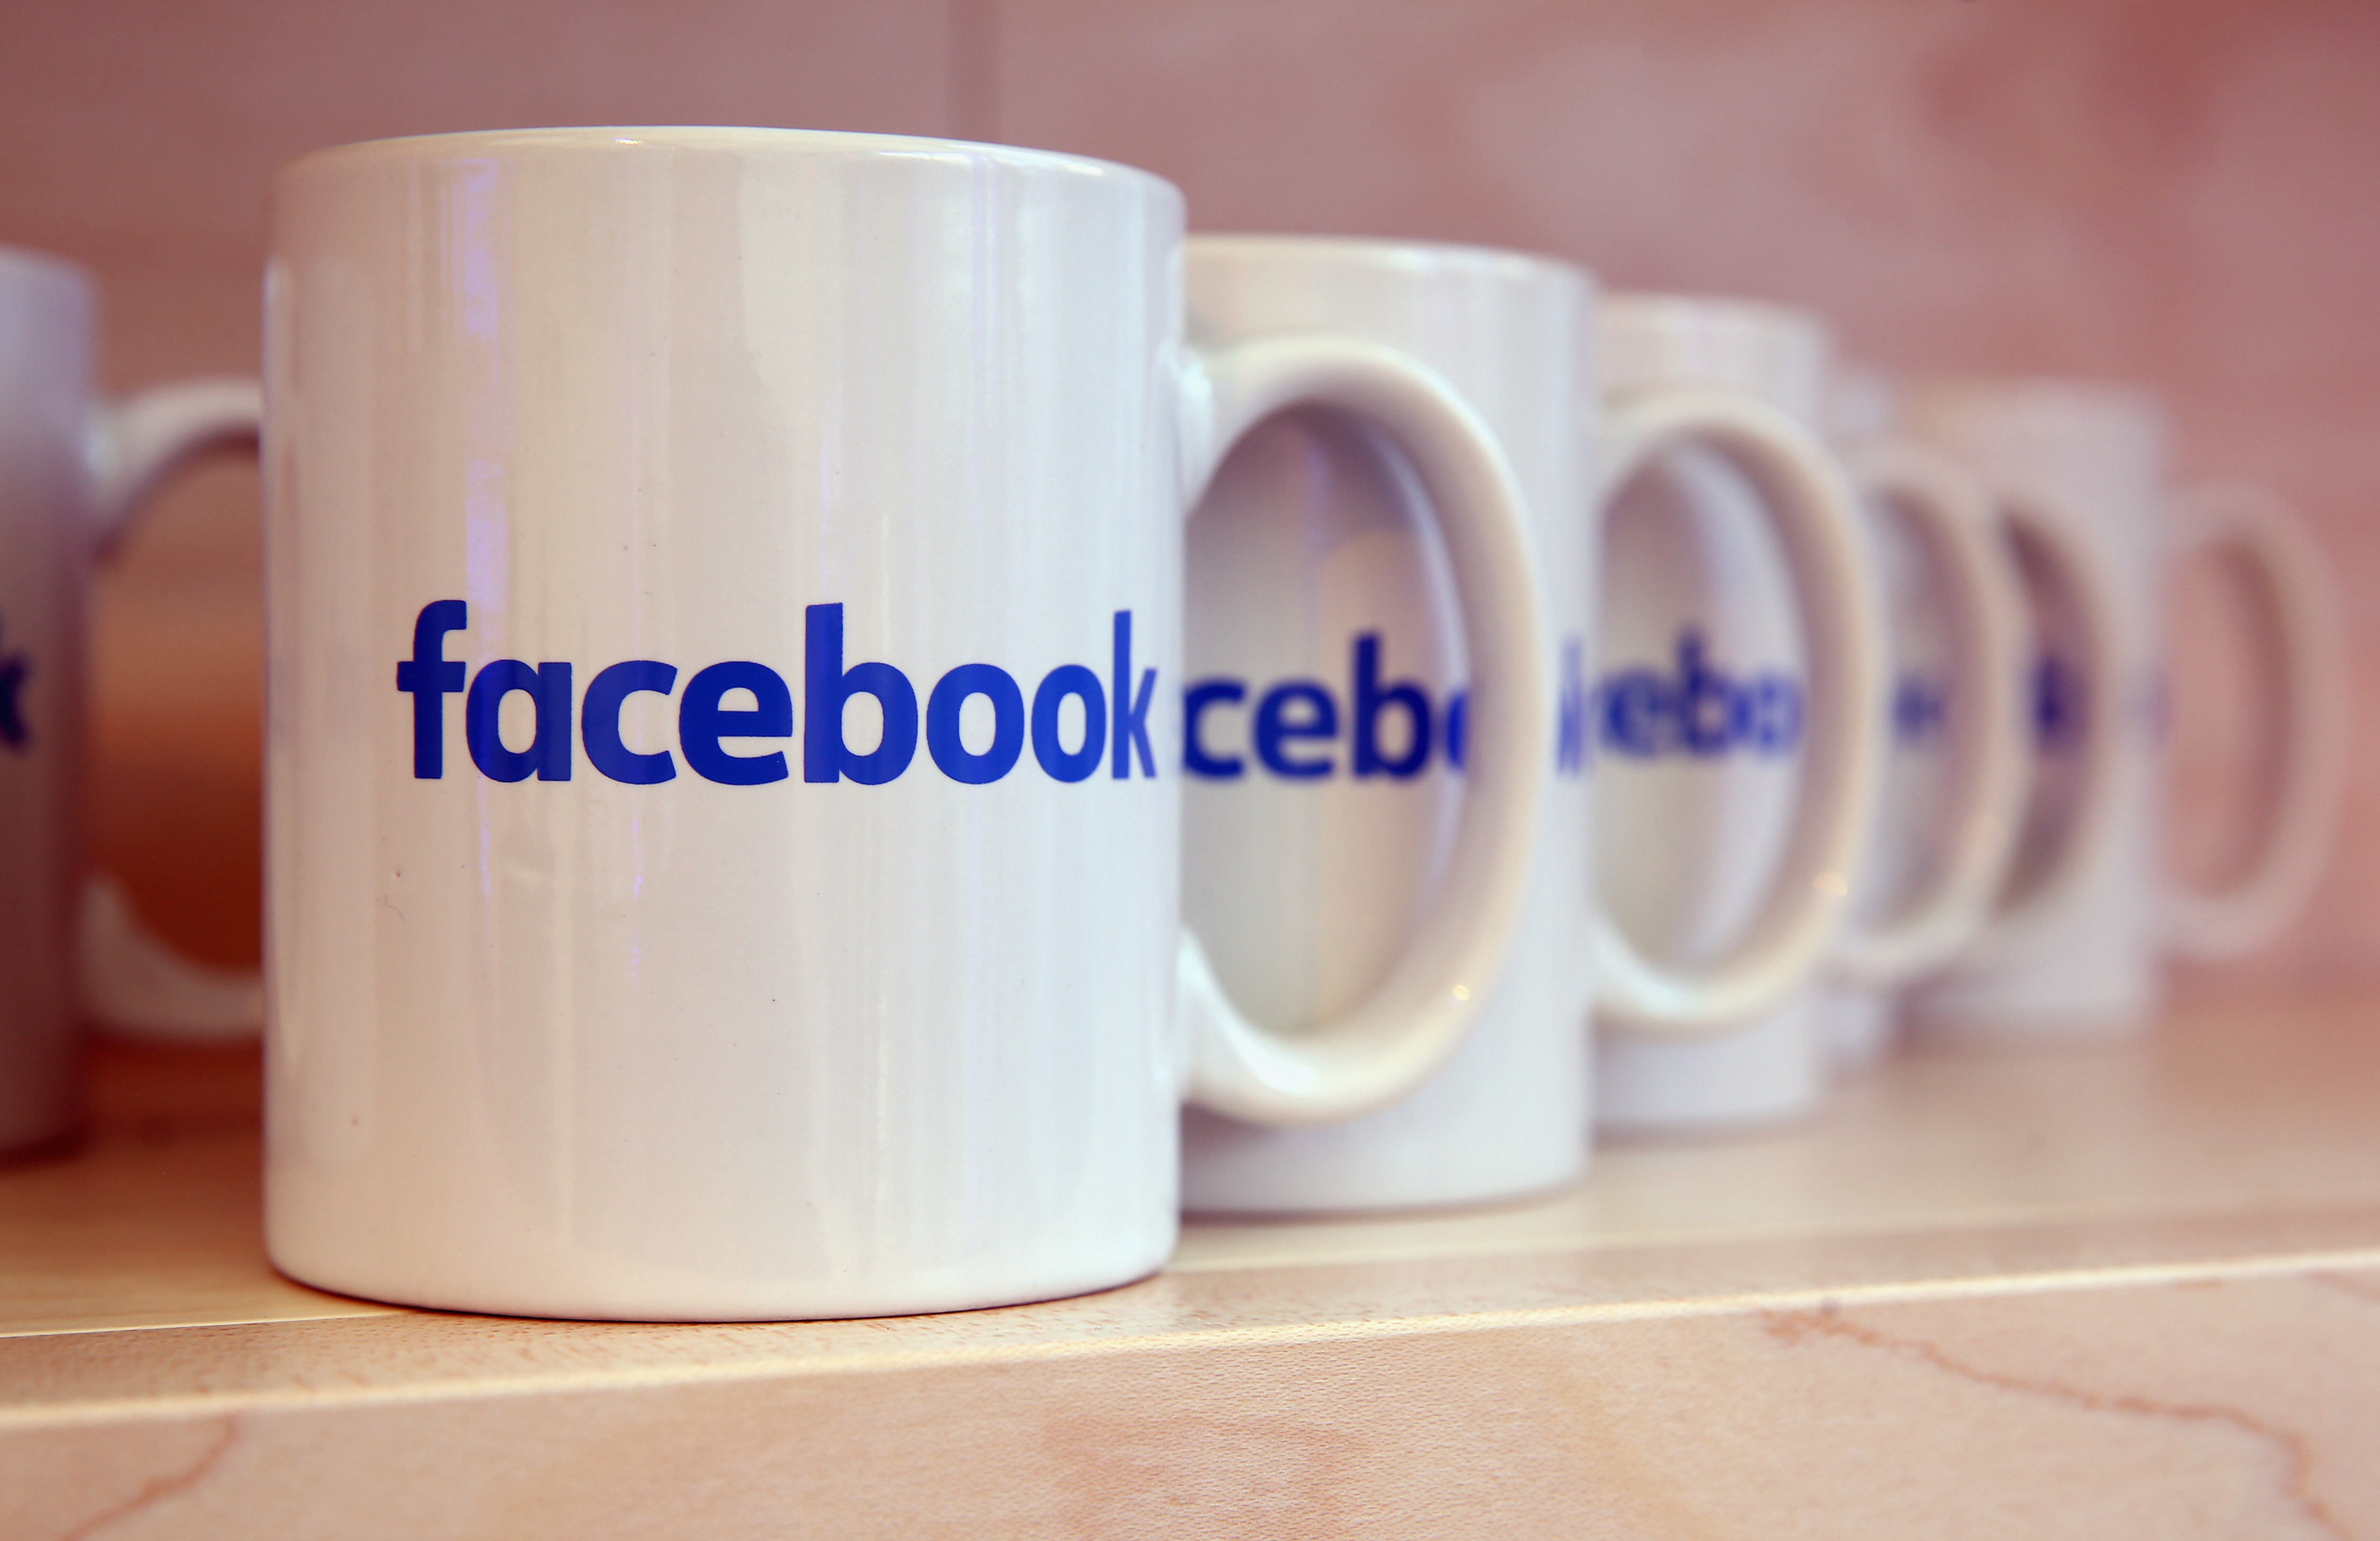 Facebook expands ‘Community Boost’ digital skills training program to Europe